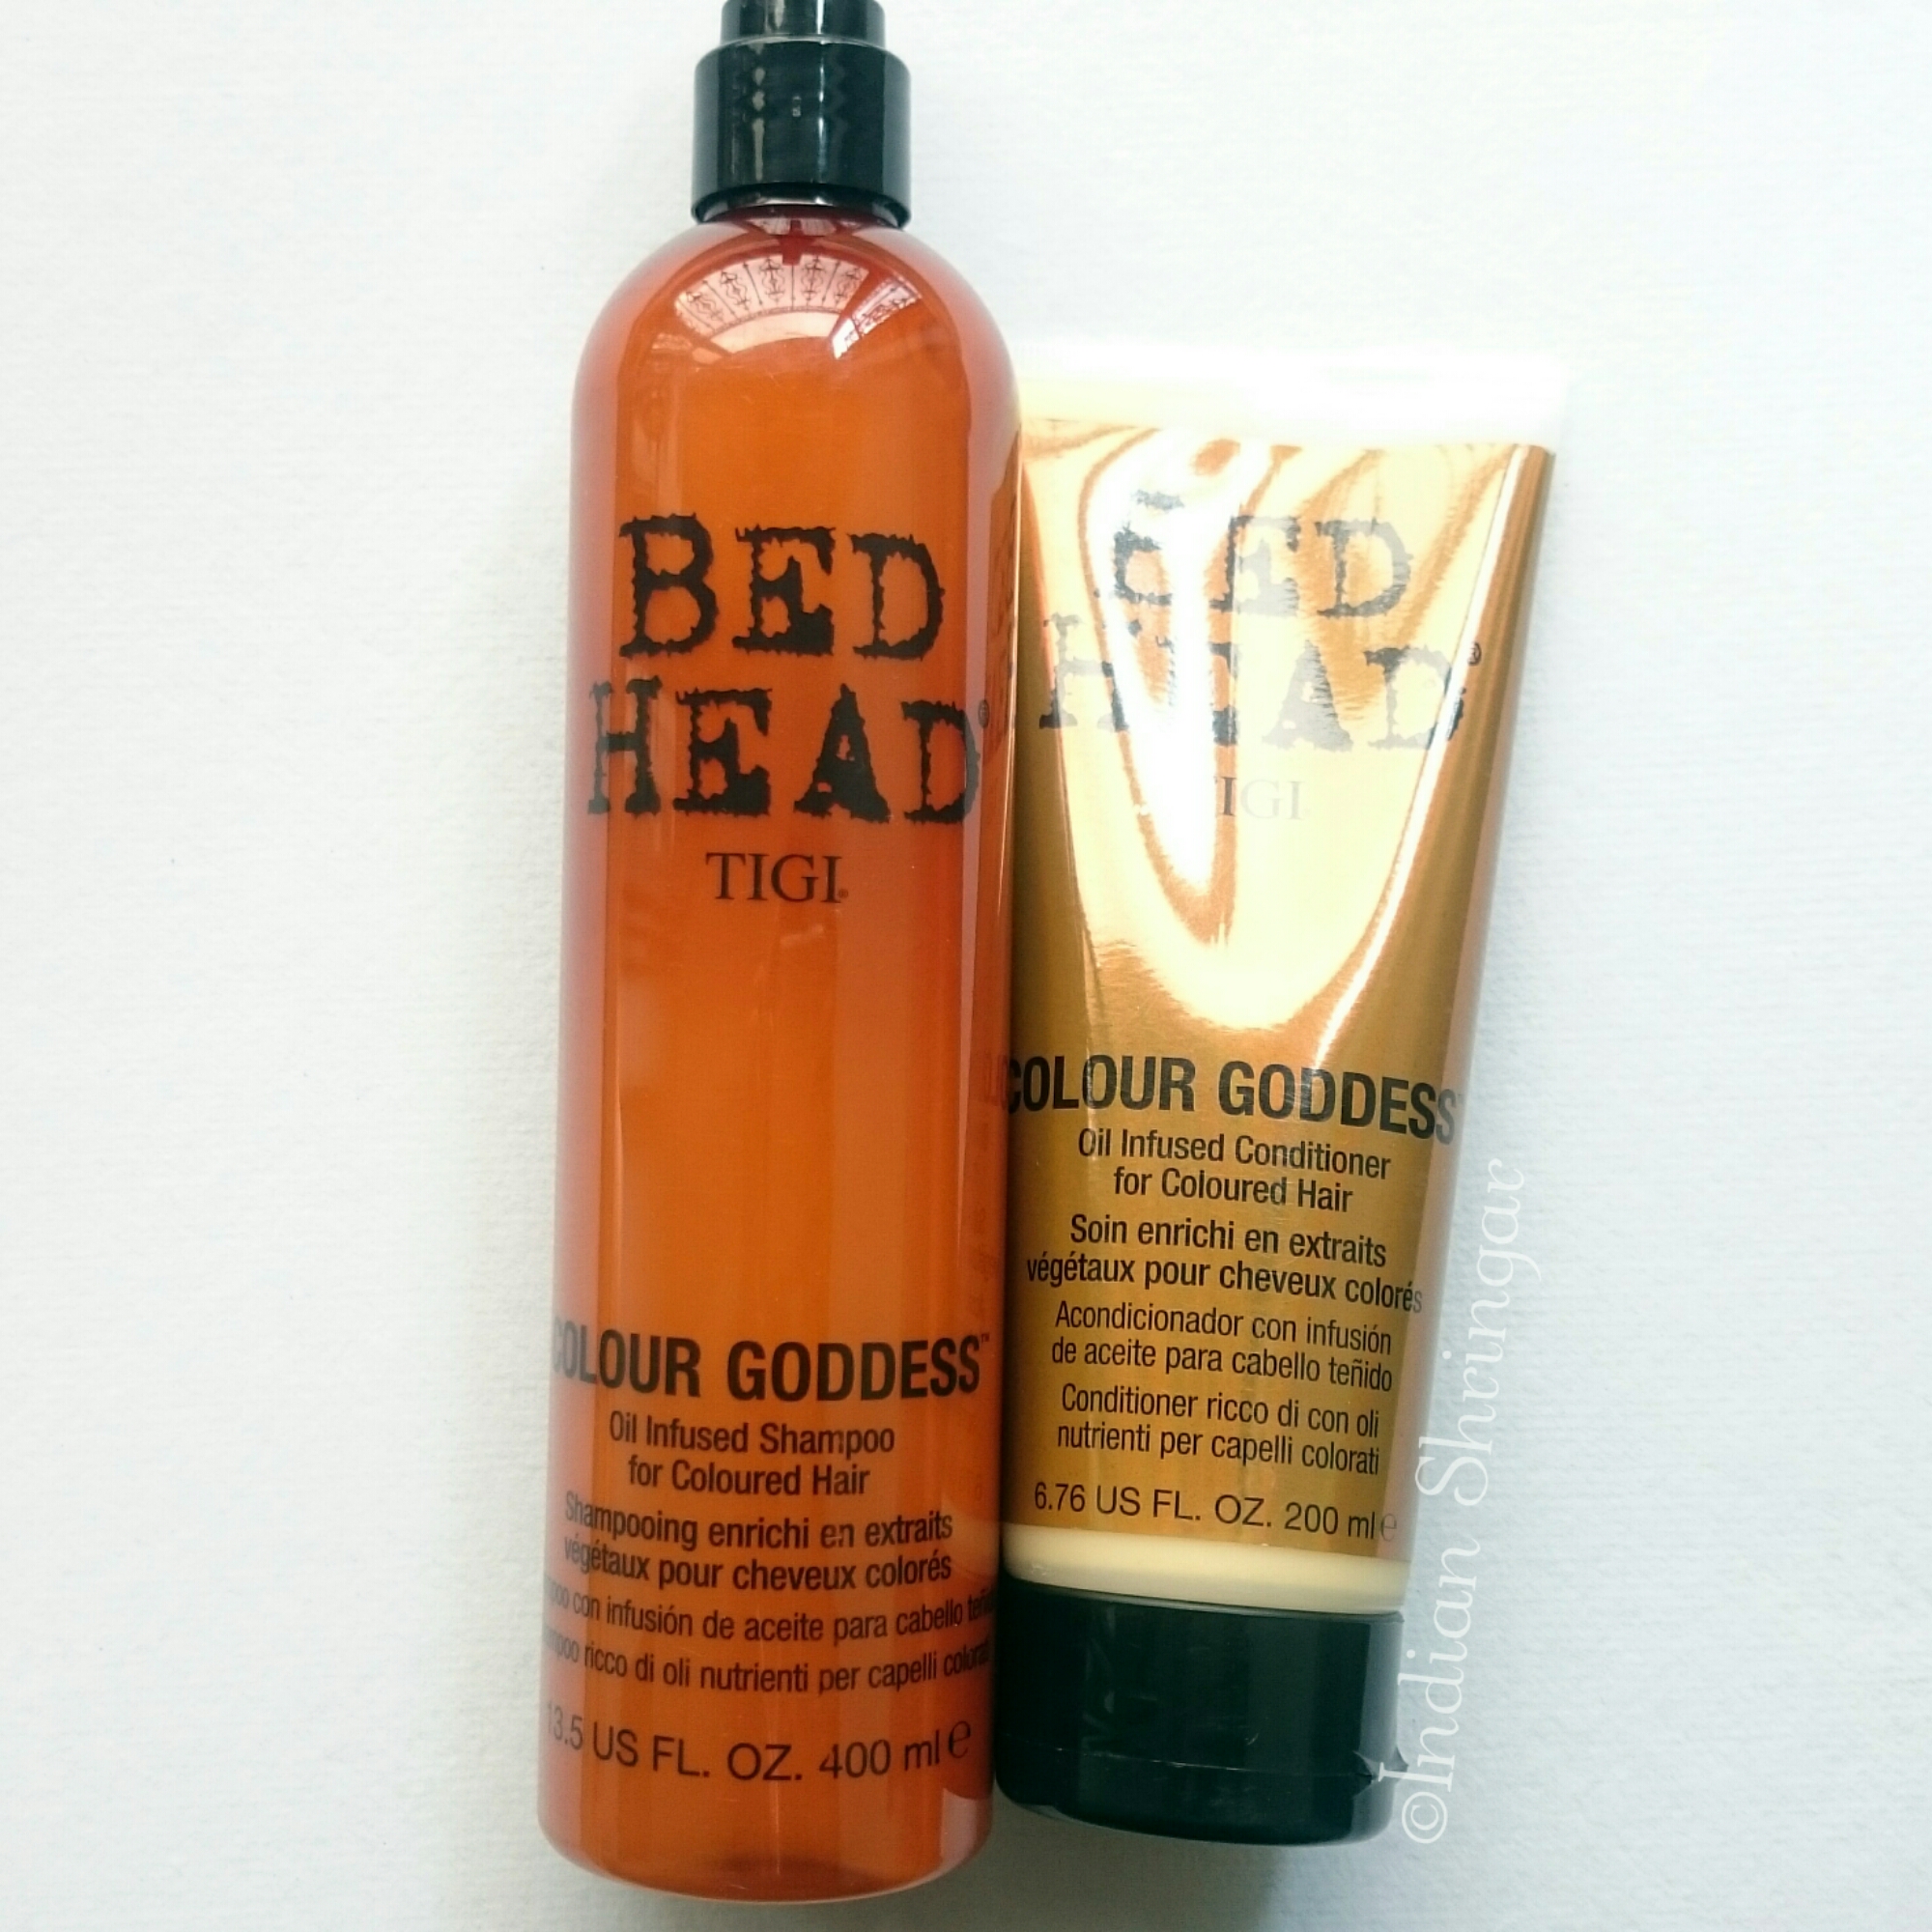 TIGI Head Colour Goddess Shampoo and Conditioner Review - The Bombay Brunette